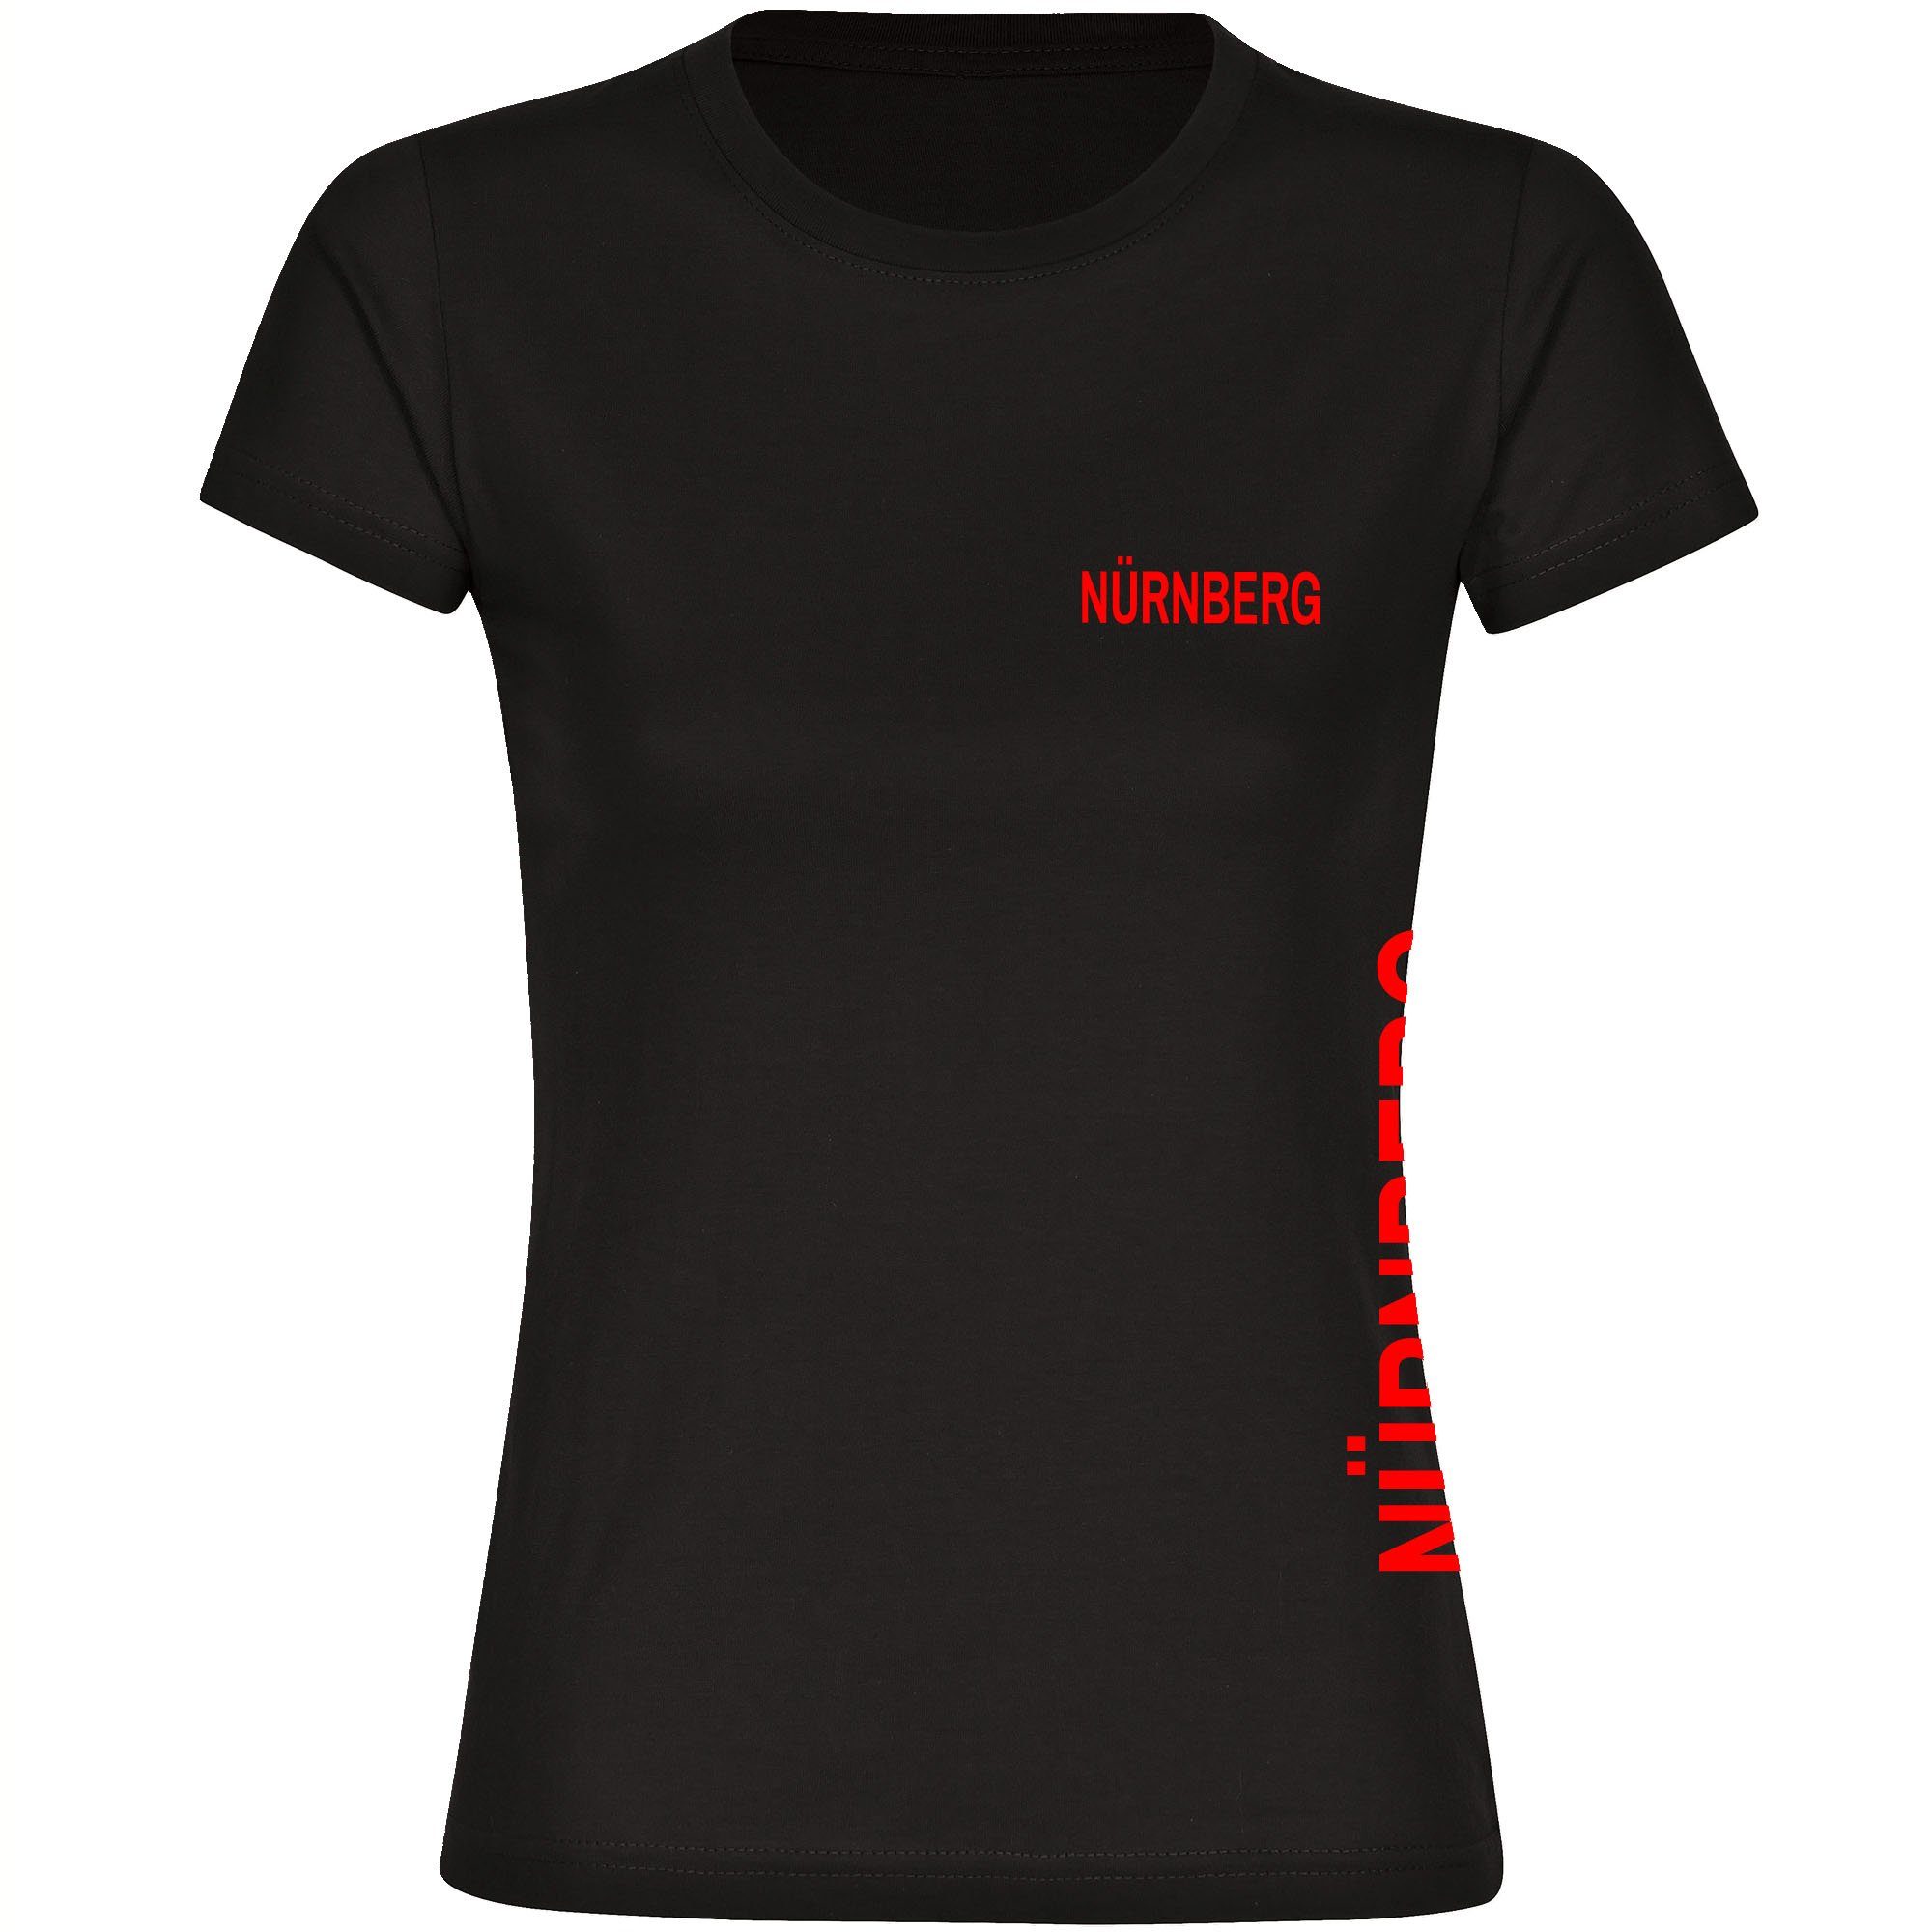 multifanshop T-Shirt Damen Nürnberg - Brust & Seite - Frauen